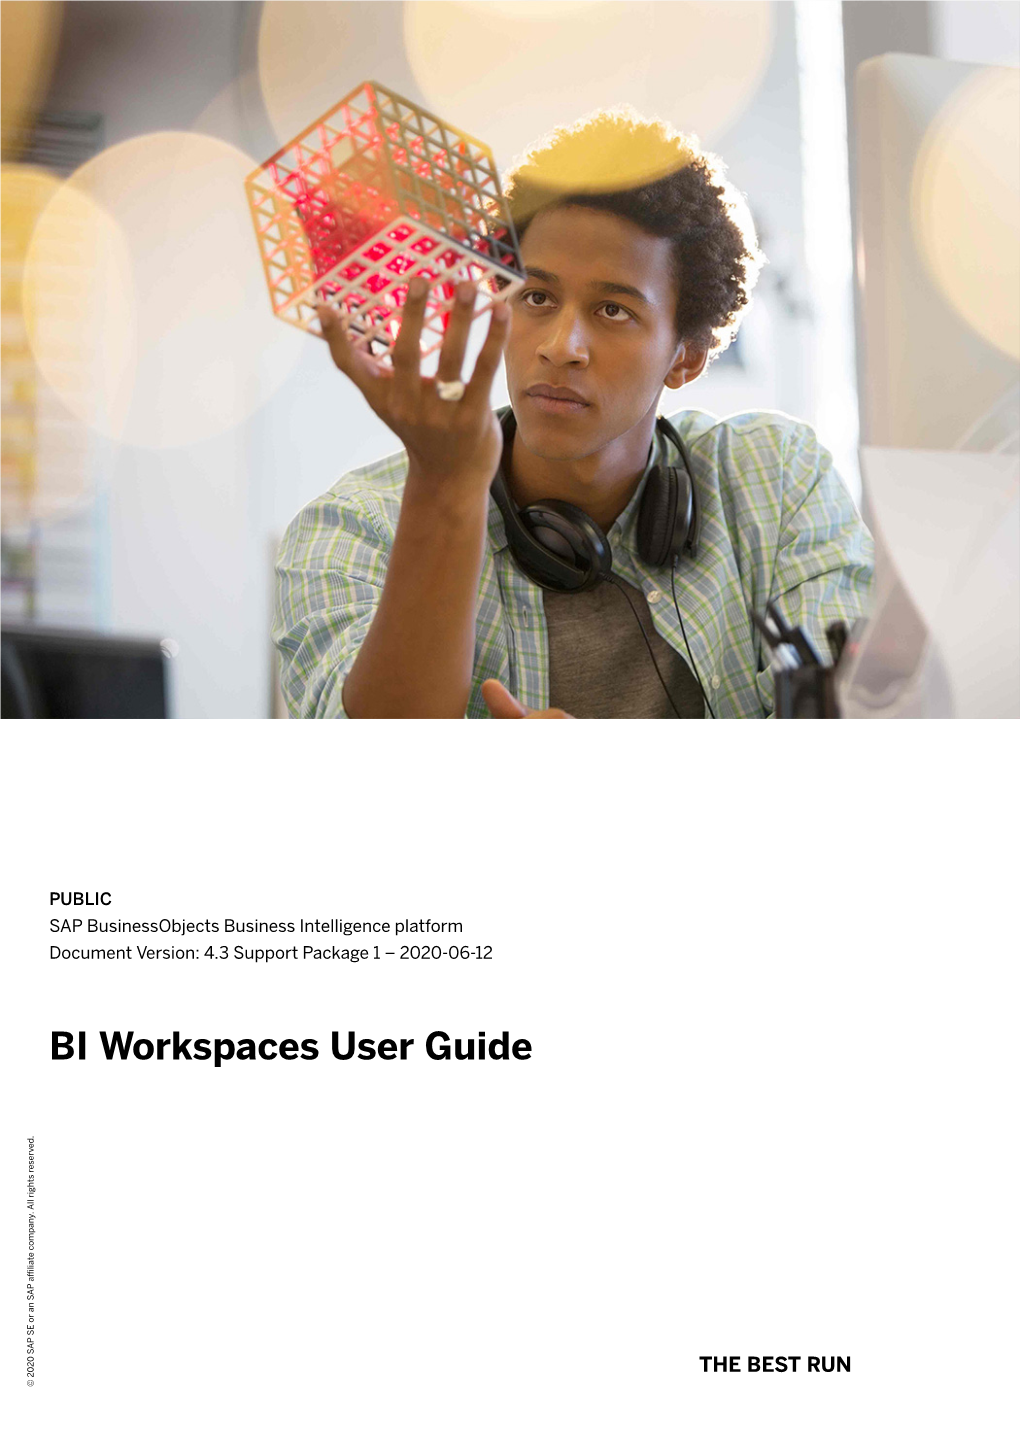 BI Workspaces User Guide Company